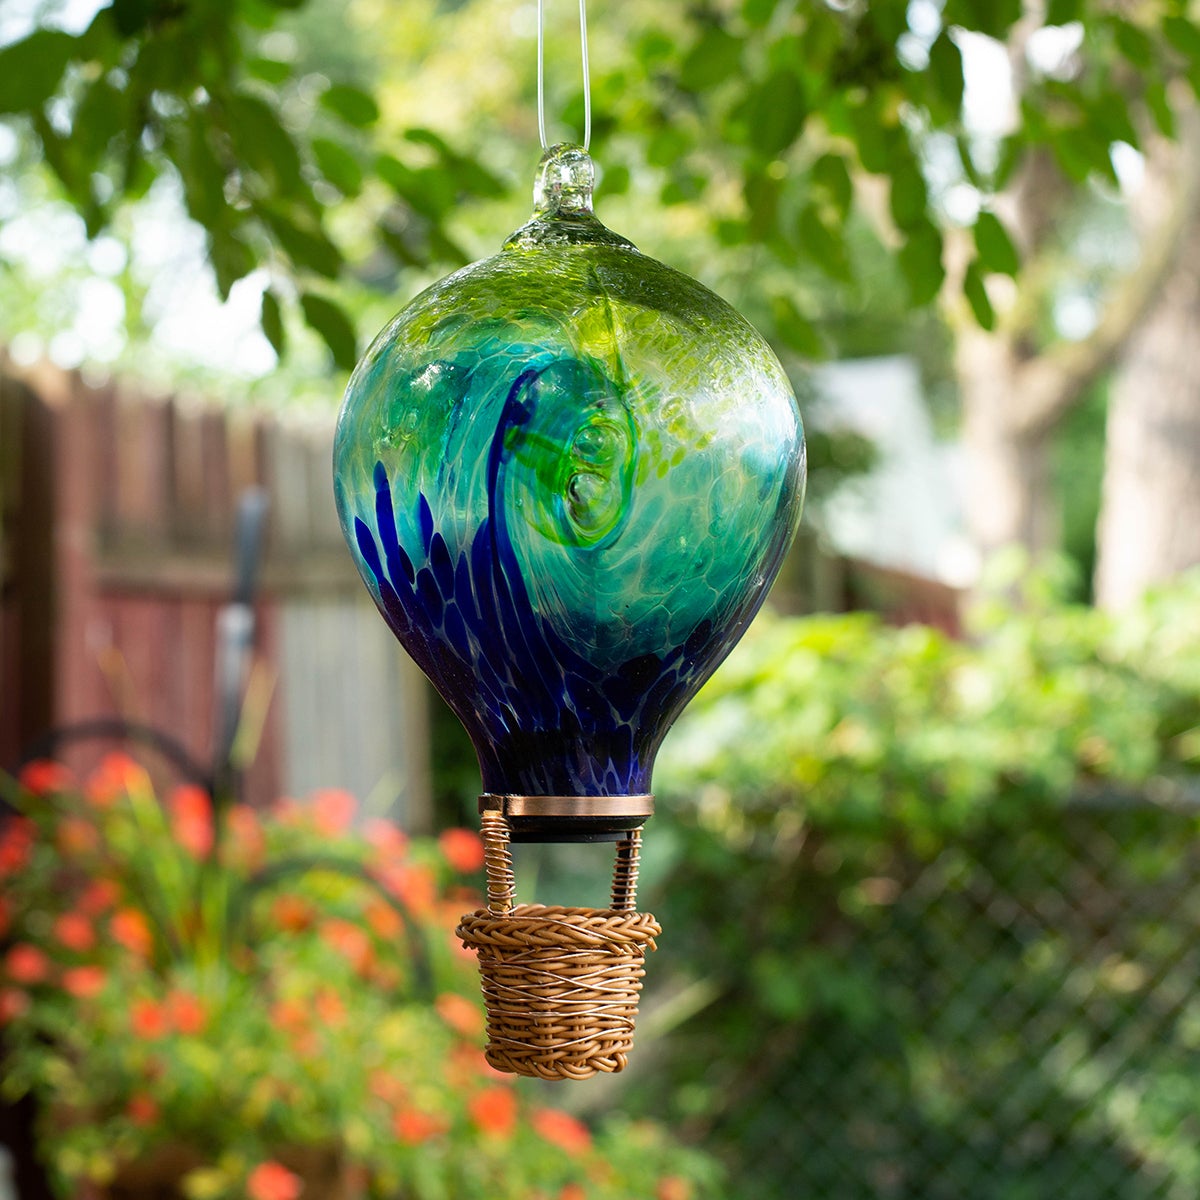 LunaLite Solar Balloon Lantern Green/Blue